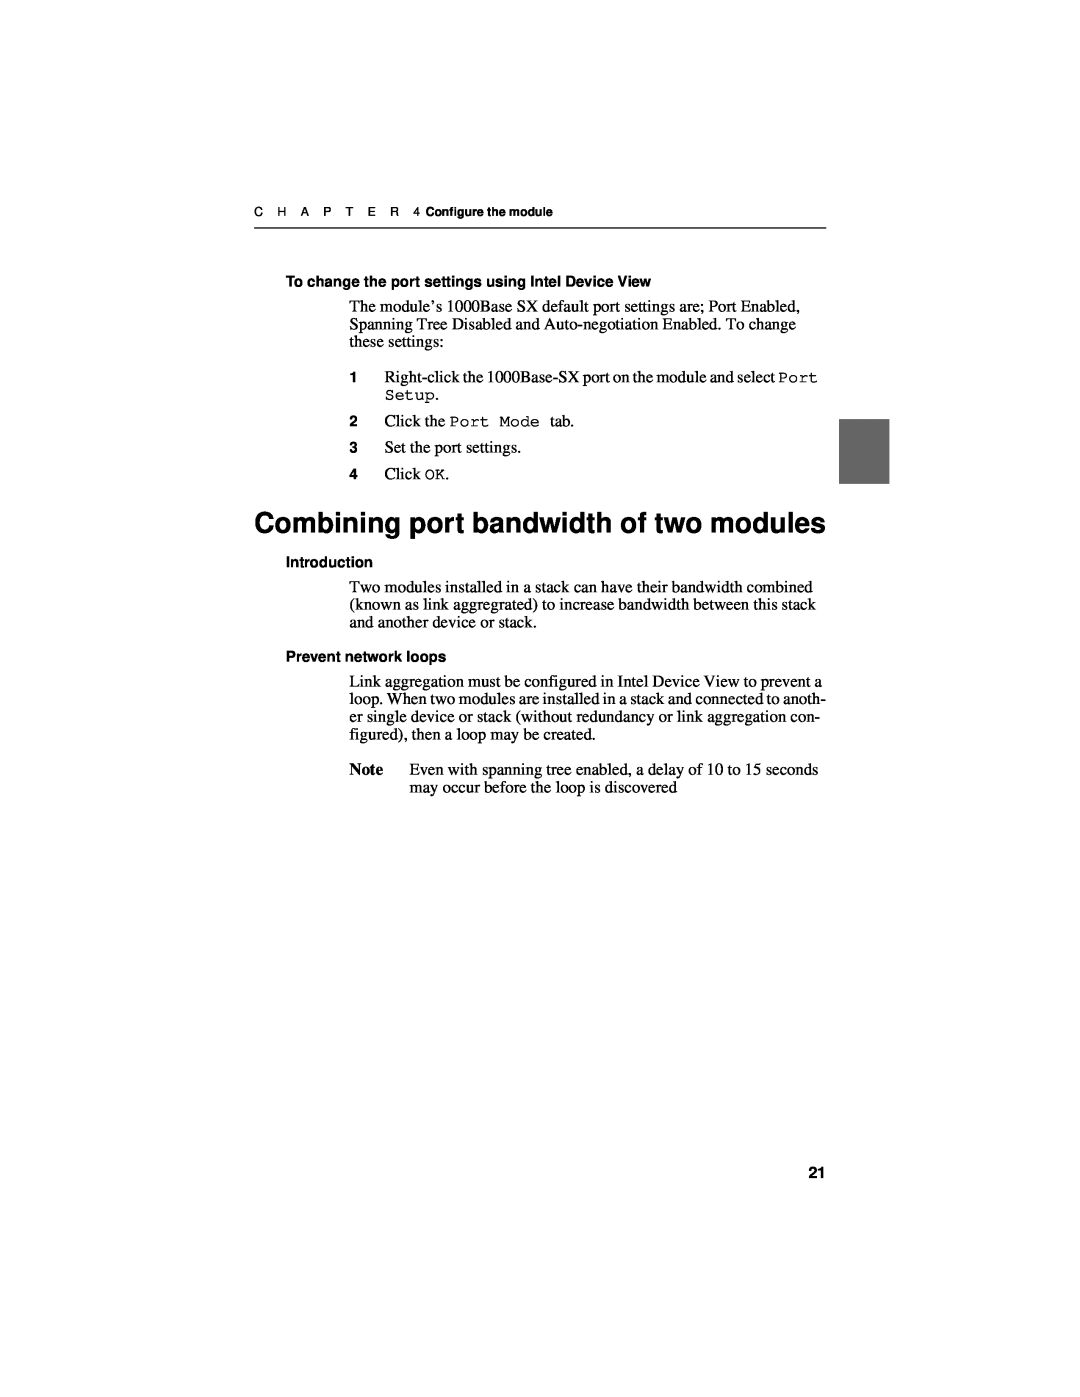 Intel 1000SX manual Combining port bandwidth of two modules 